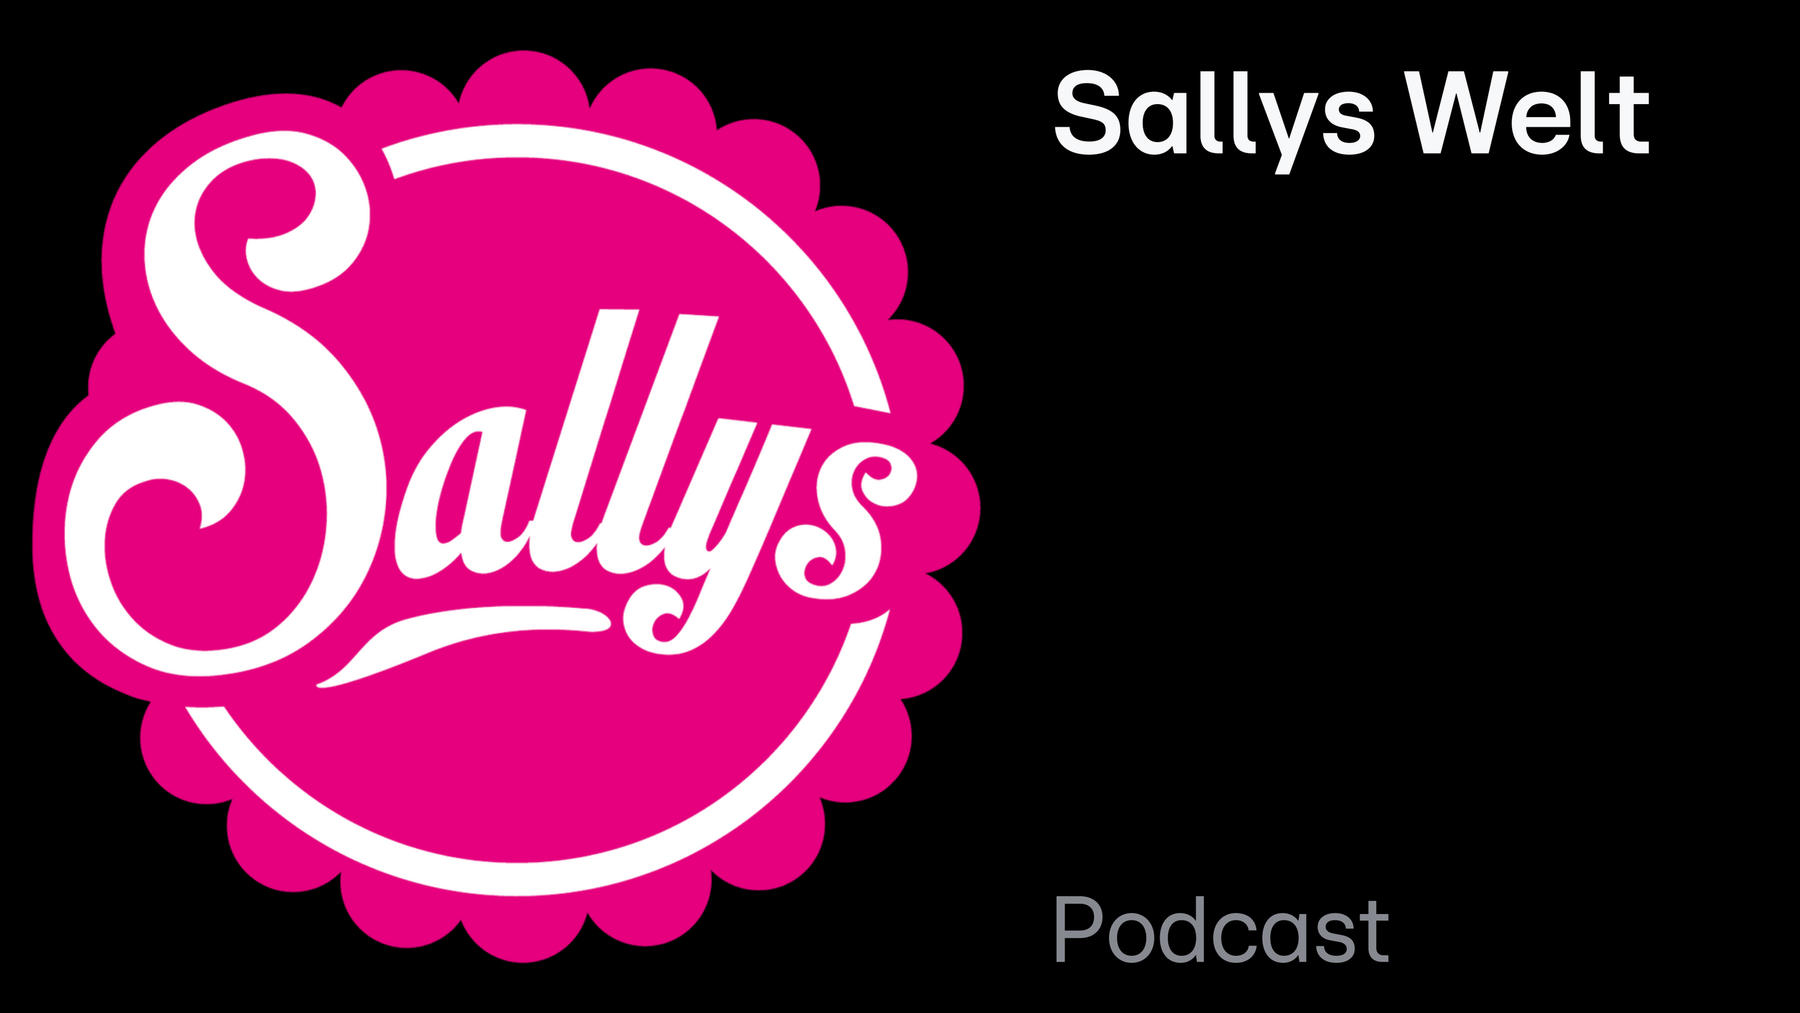 Podcast: Sallys Welt